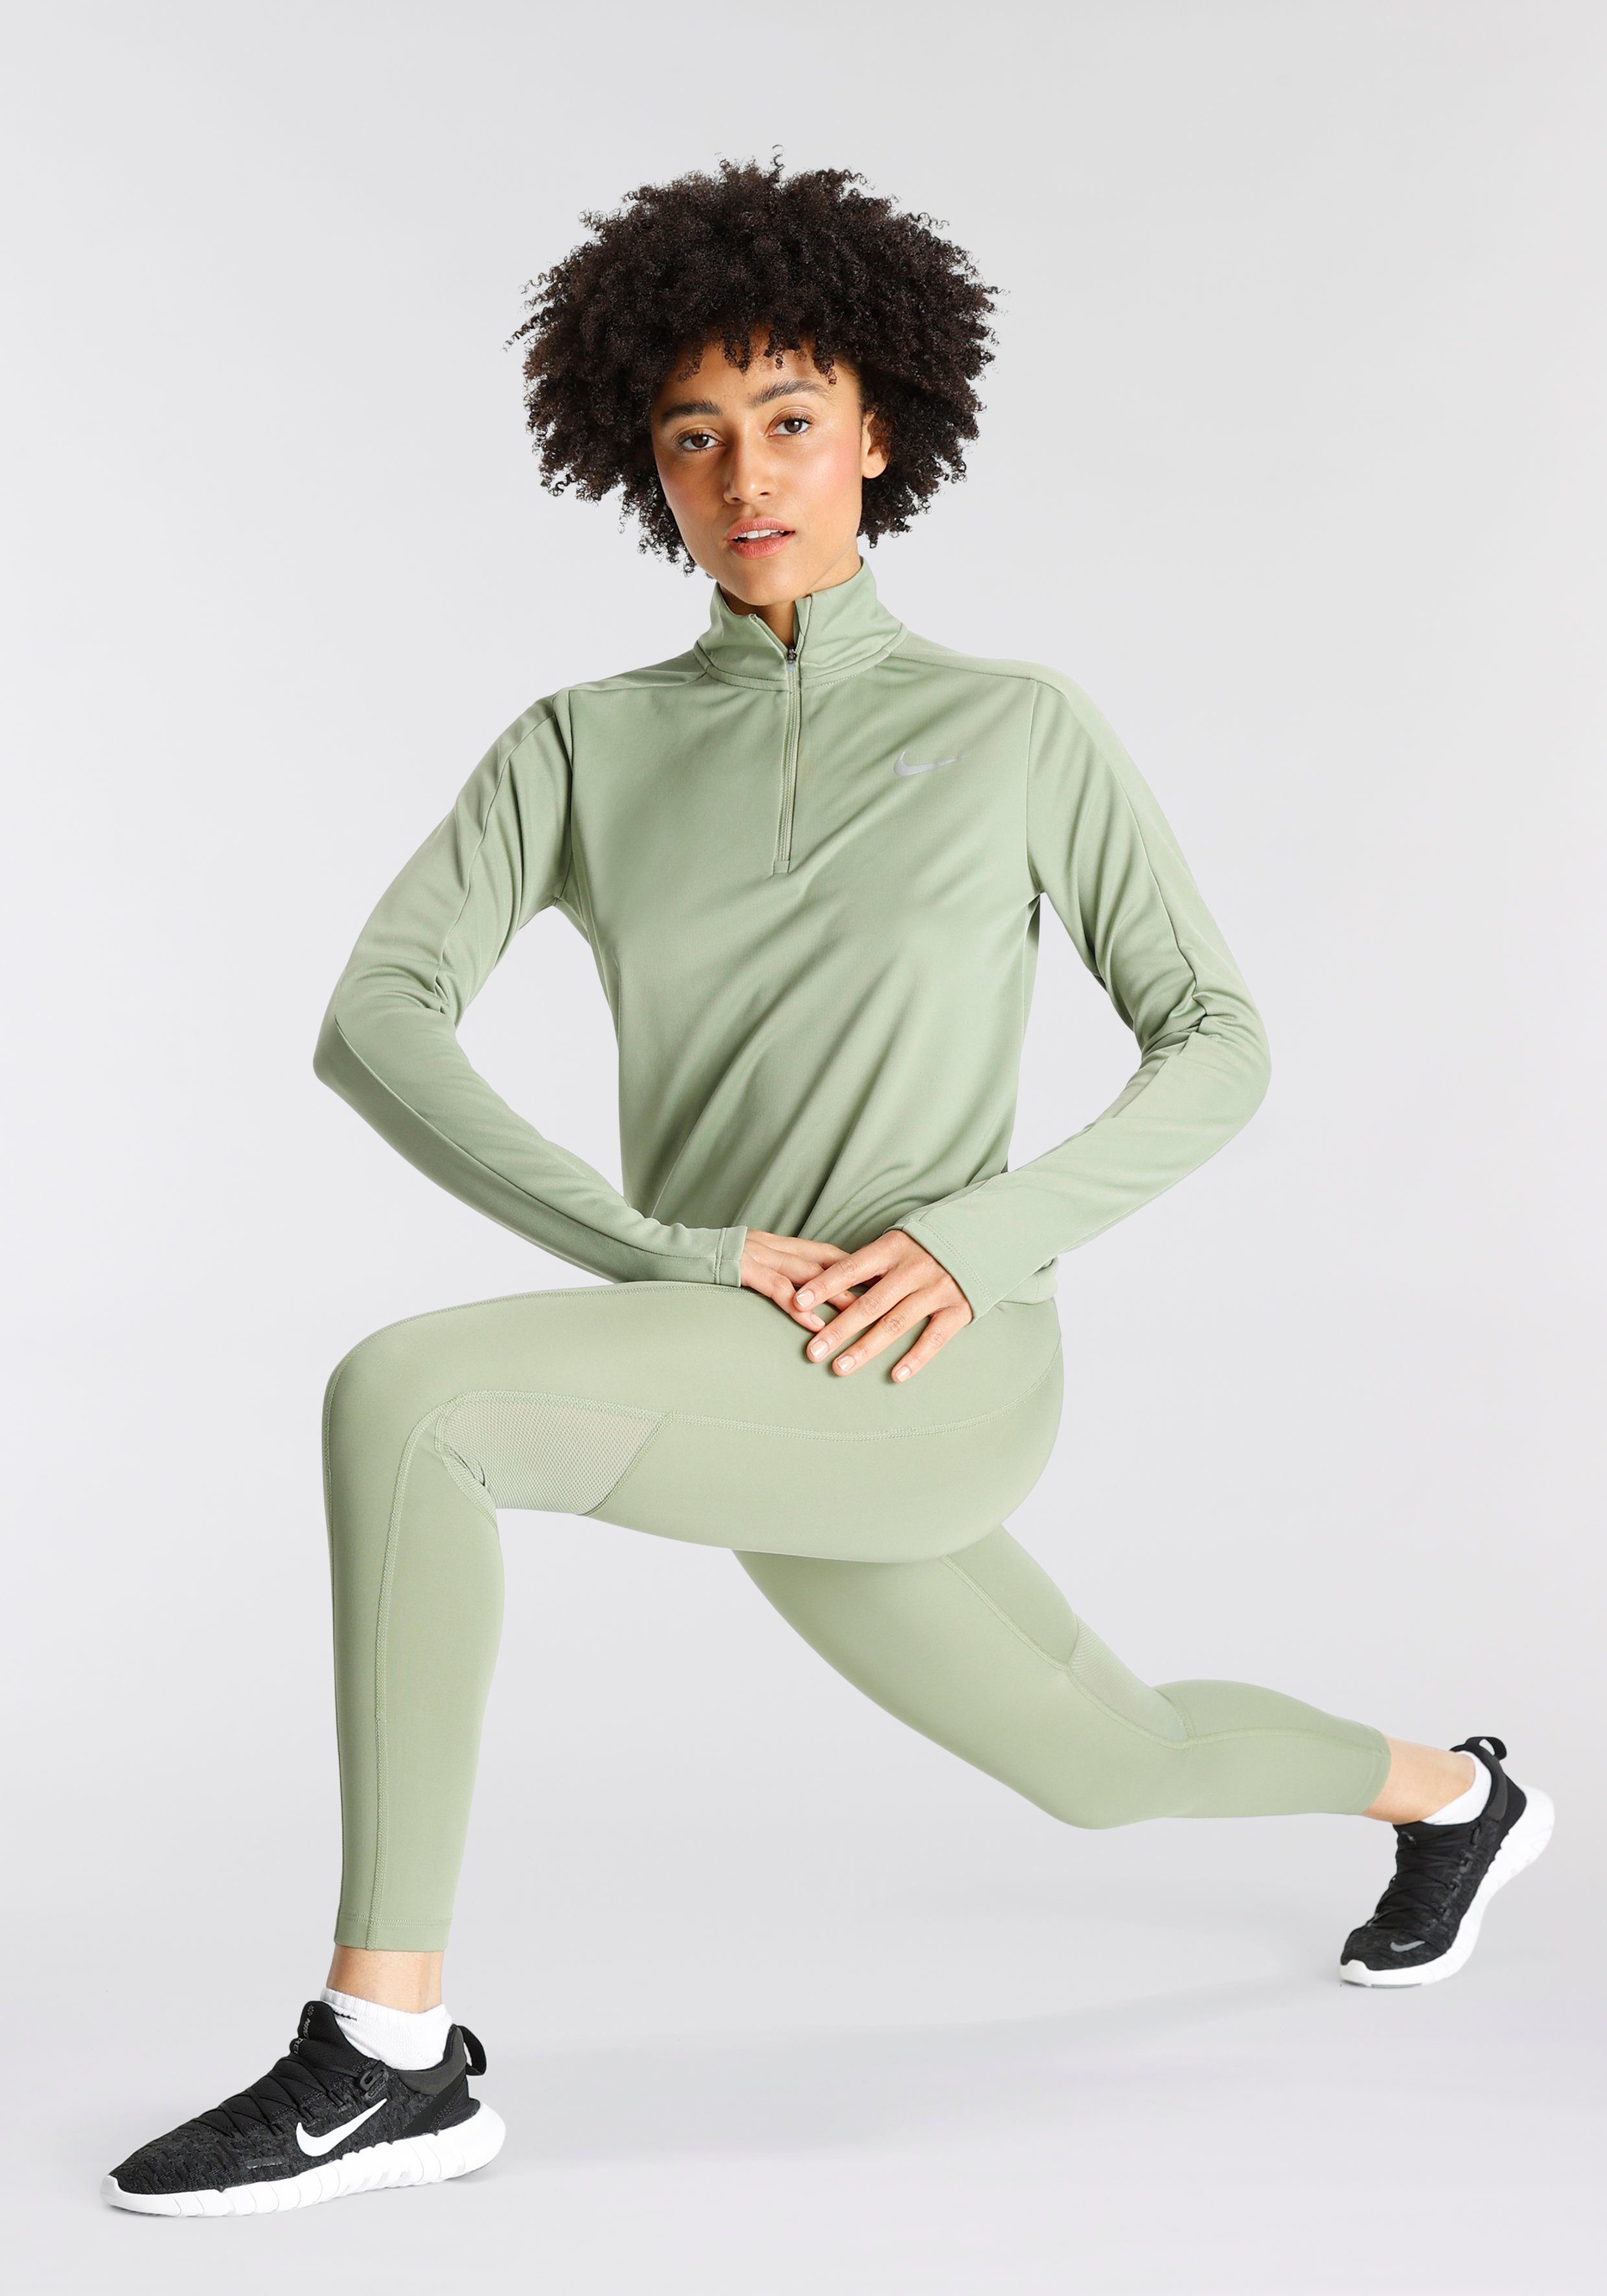 MID-RISE Nike EPIC RUNNING FAST Lauftights POCKET LEGGINGS grün WOMEN'S